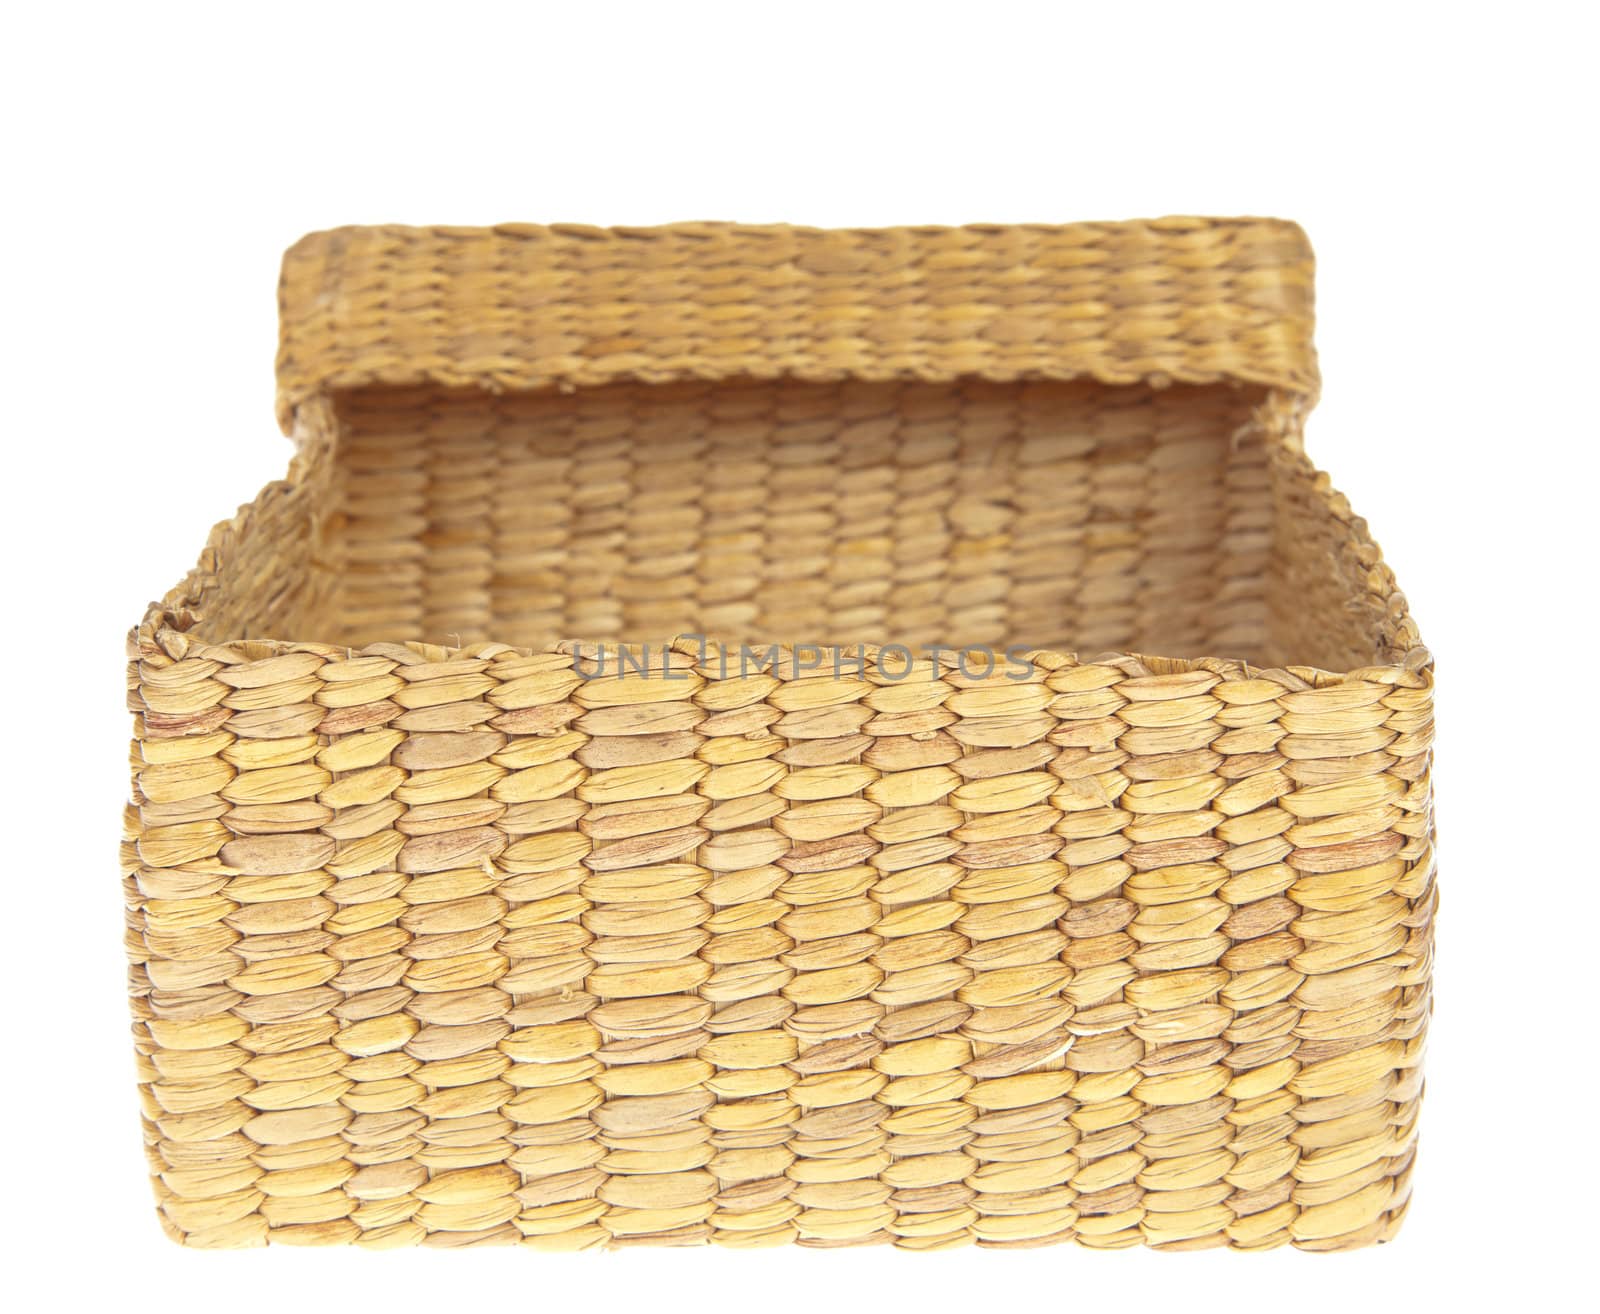 open wicker basket isolated on white background  by FrameAngel